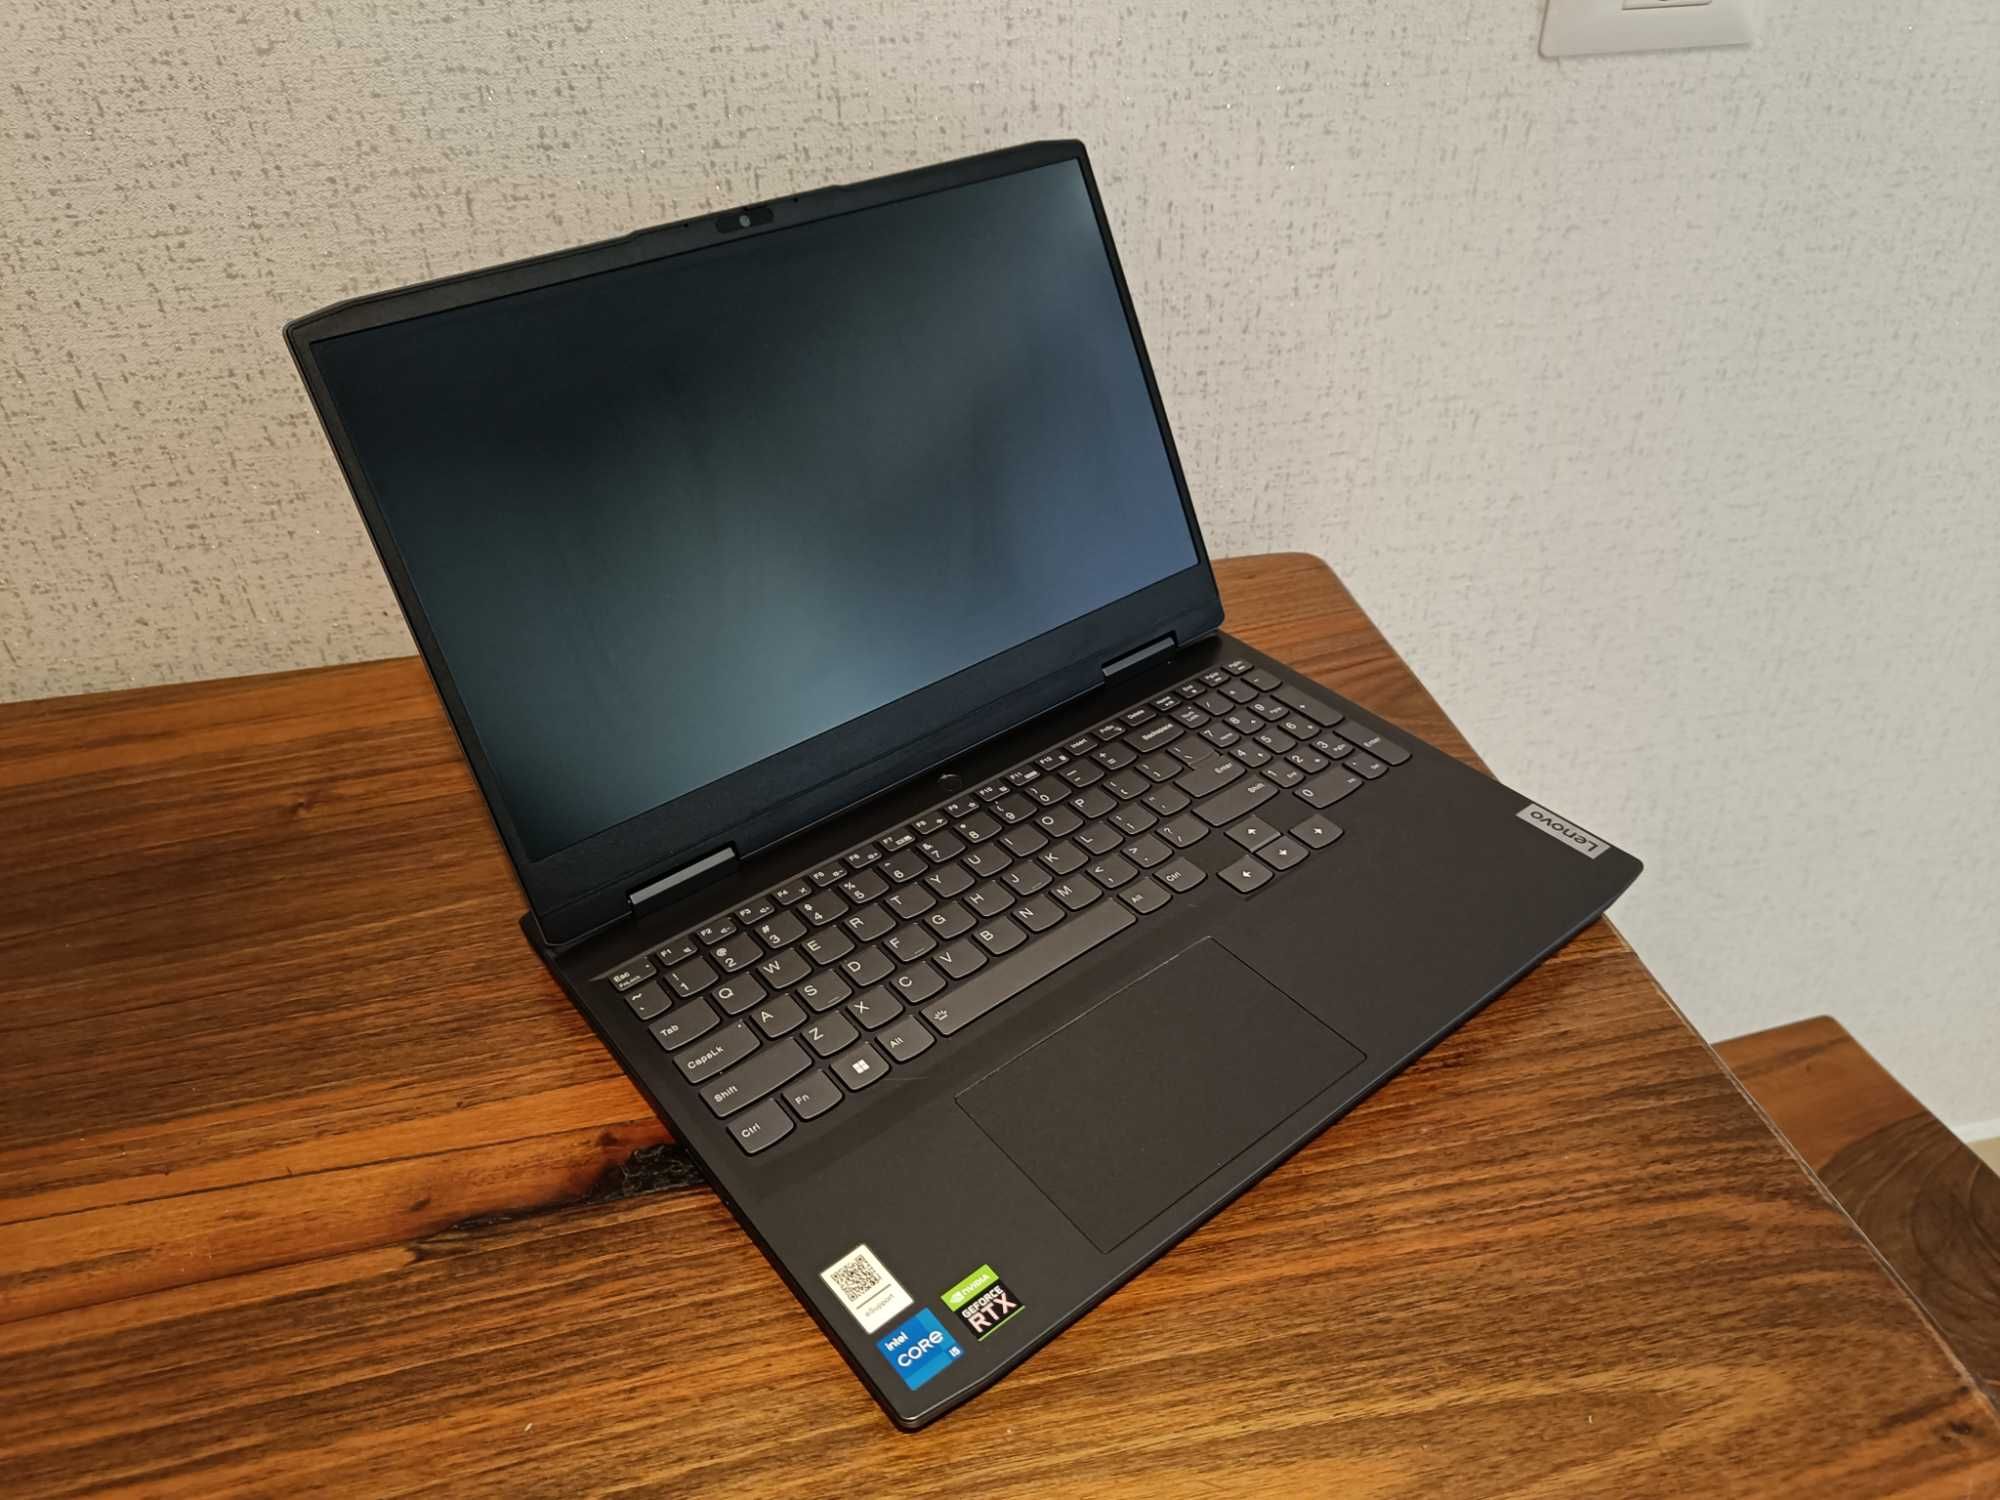 NOU, IN GARANTIE - Laptop gaming Lenovo IdeaPad 3